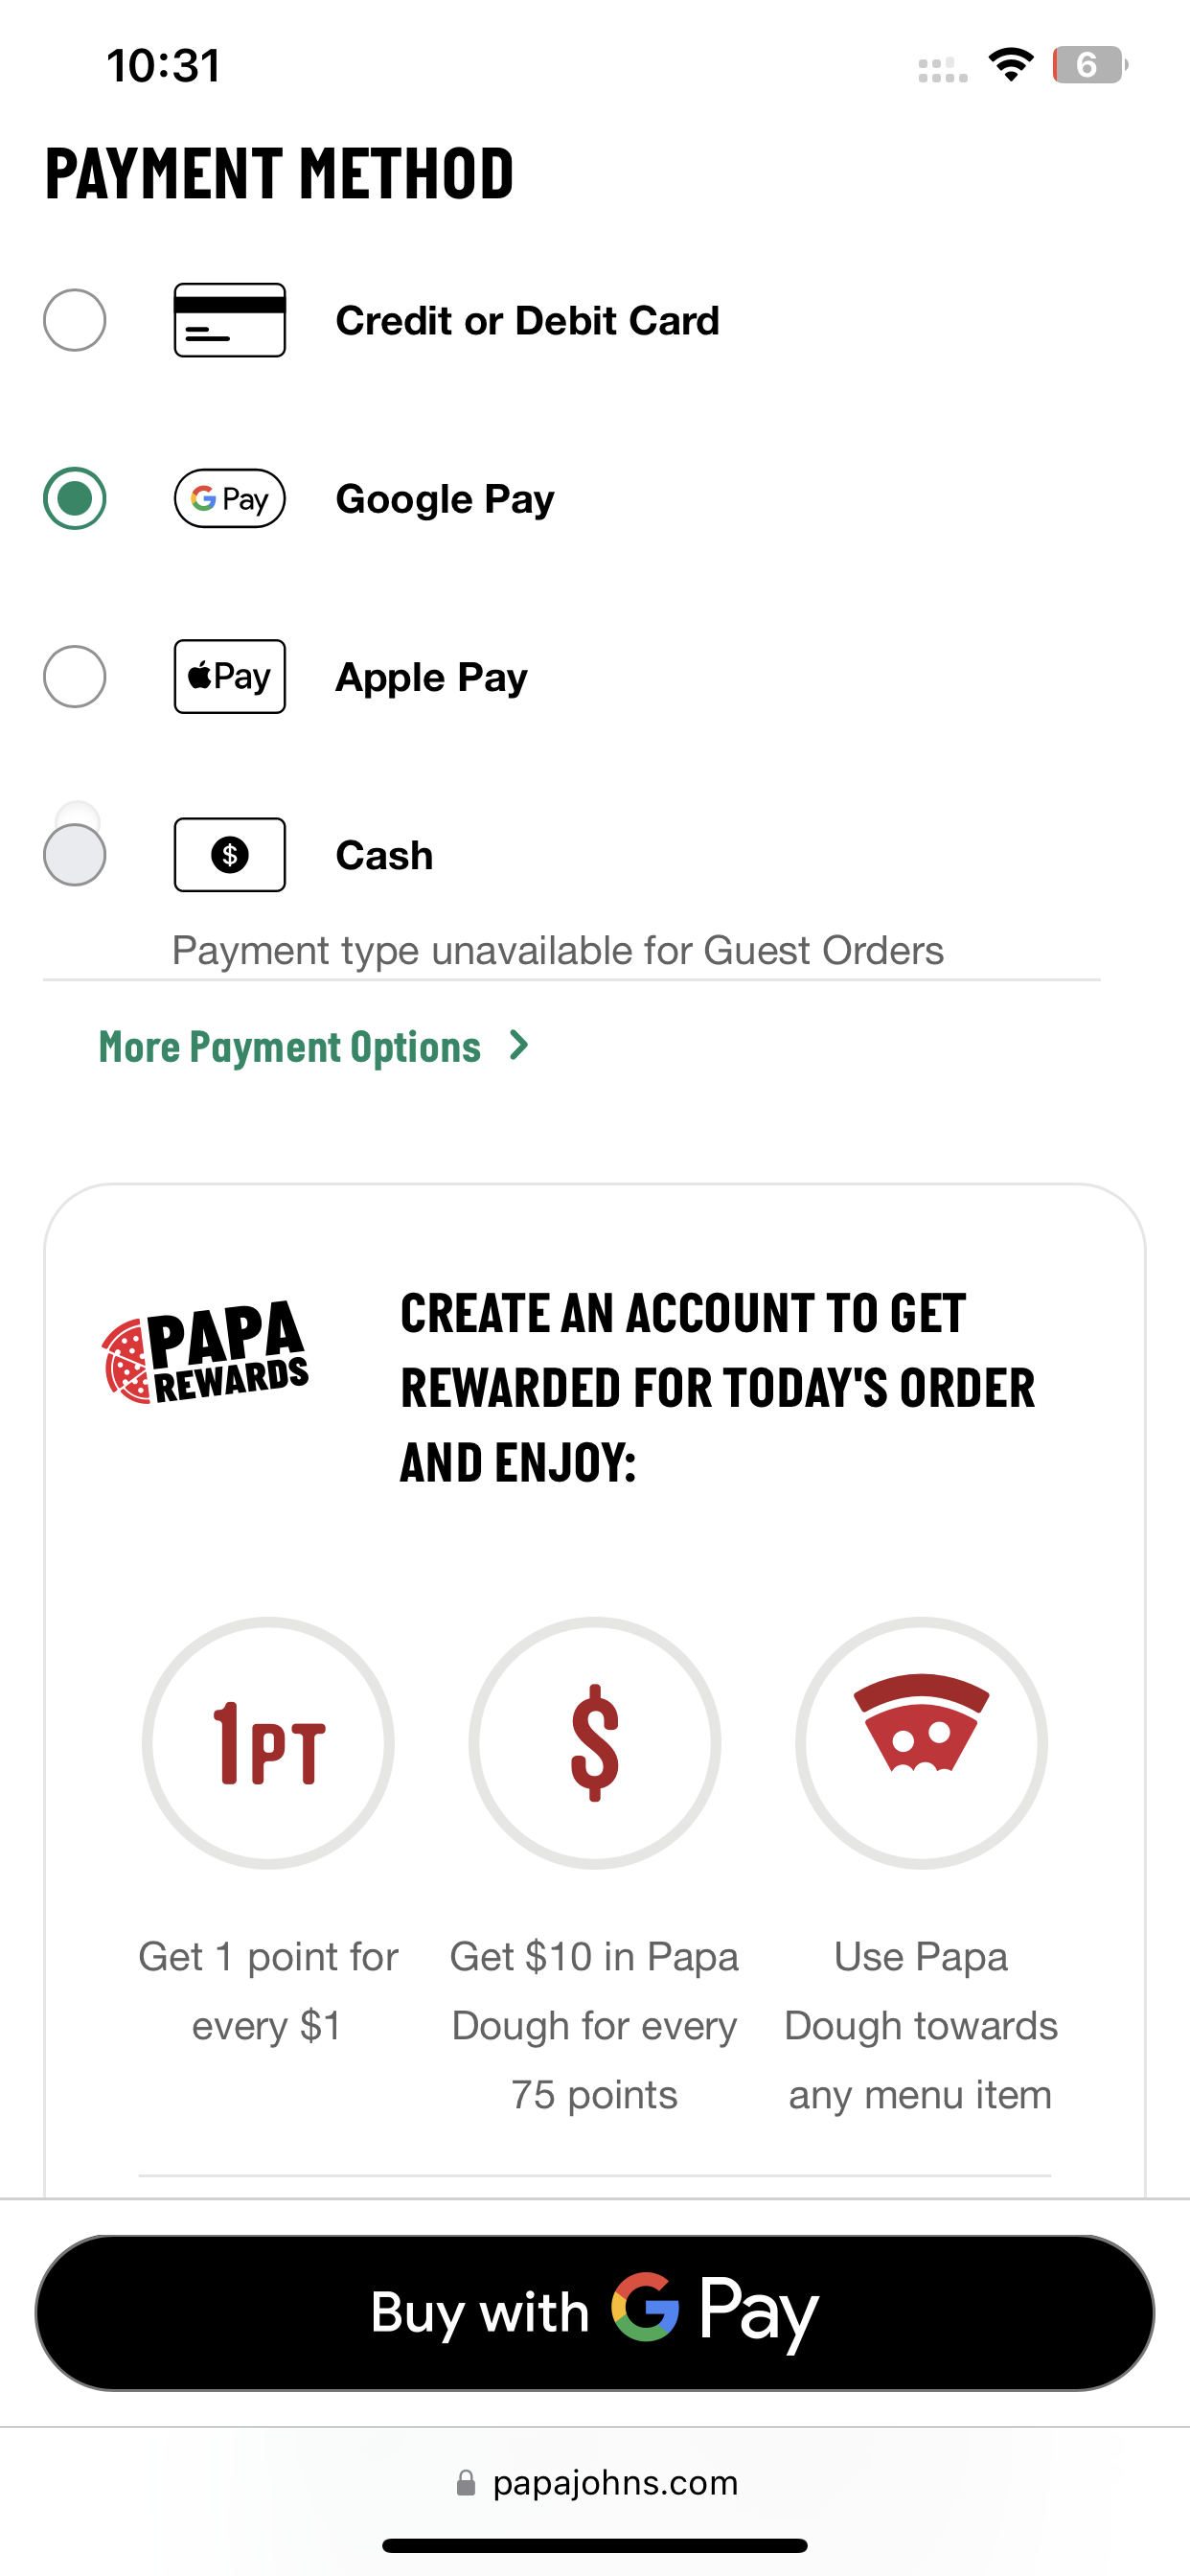 Papa John's accepts Google Pay & Apple Pay on its website.